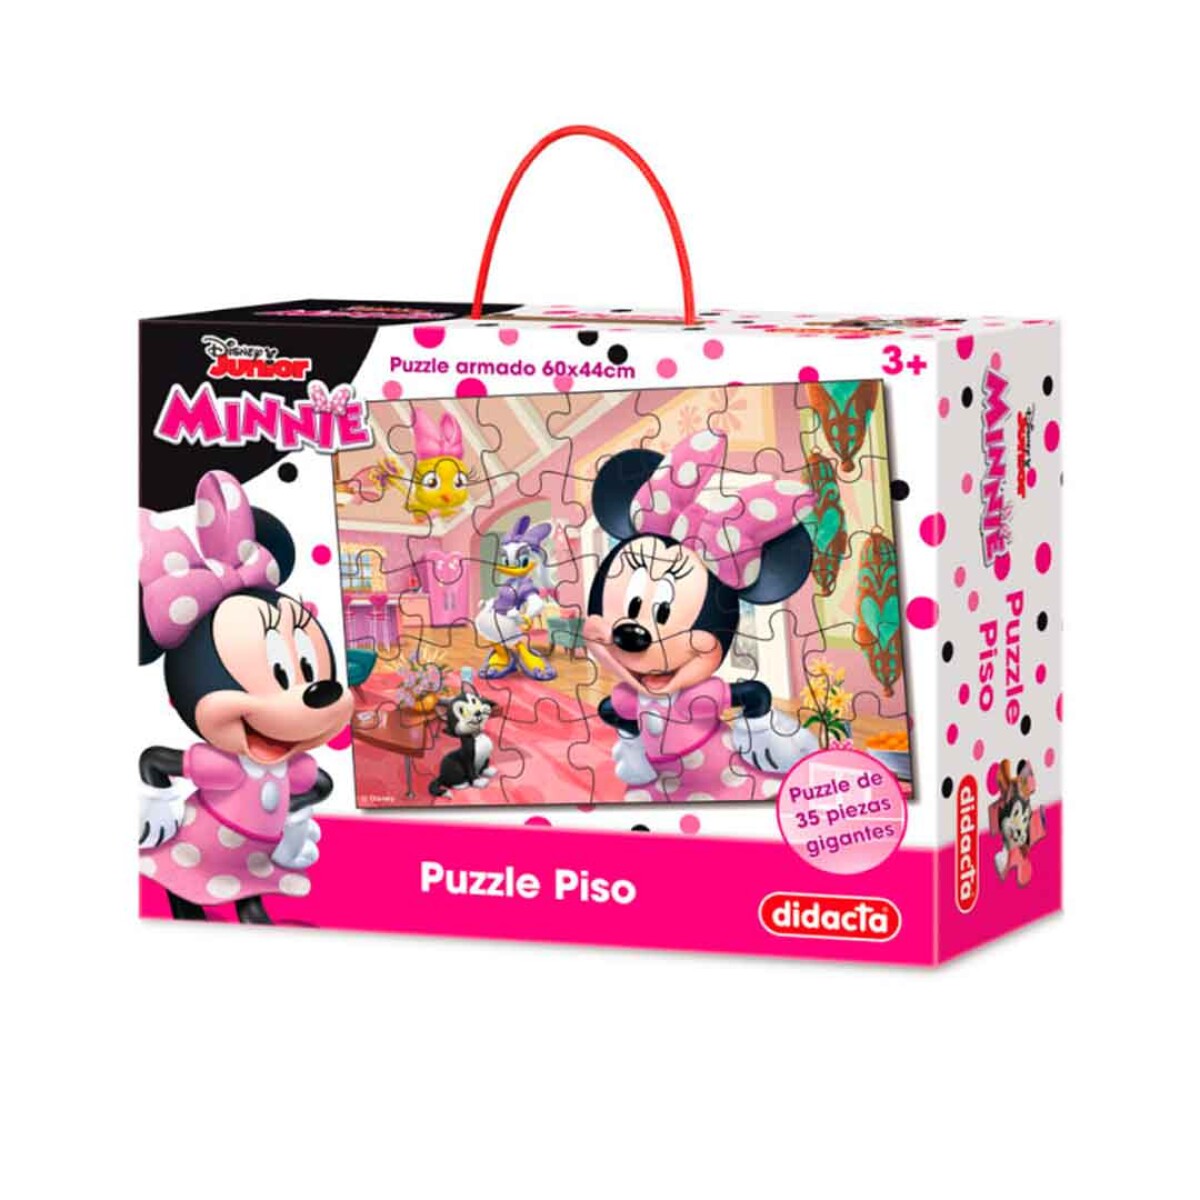 Puzzle Piso Minnie Mouse Didacta 35 piezas - 001 